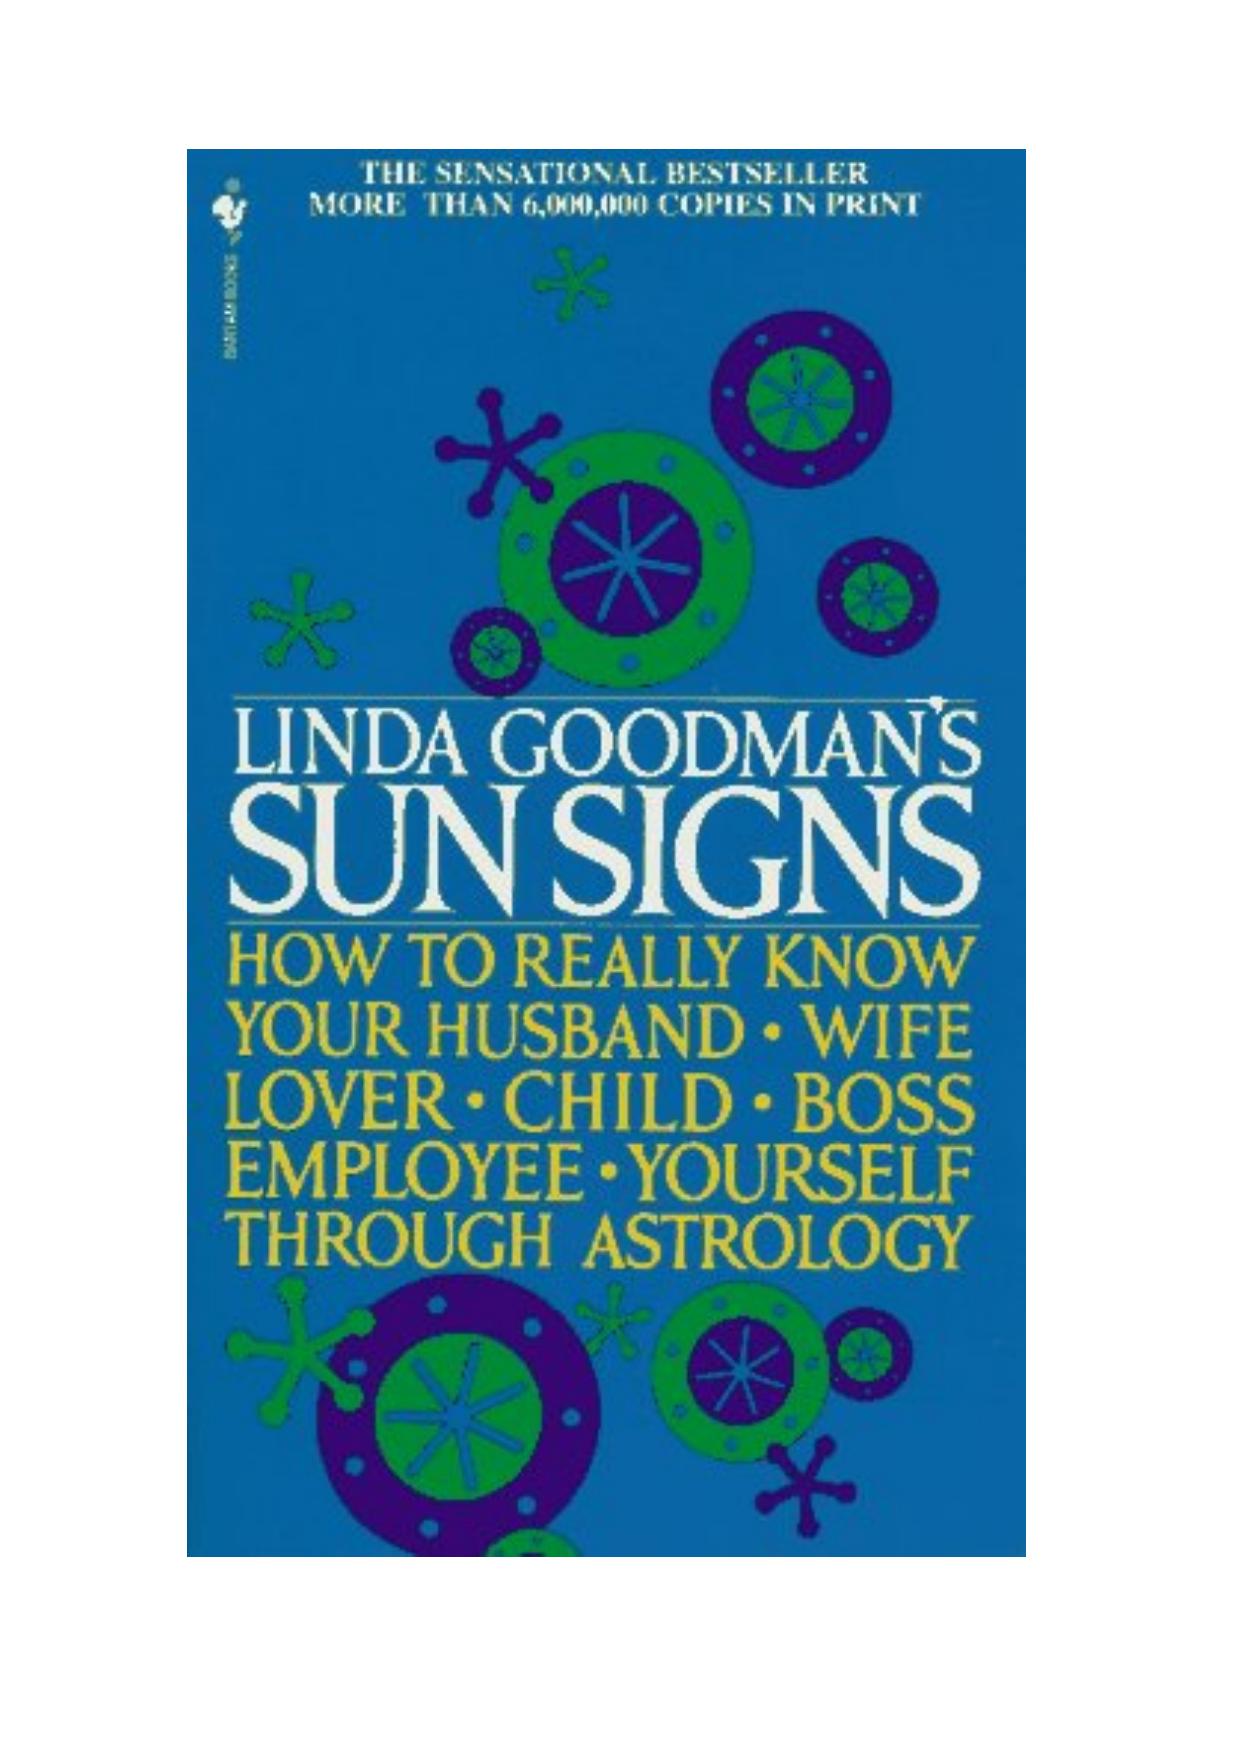 Linda_Goodman_Linda_Goodmans_Sun_Signs__1968